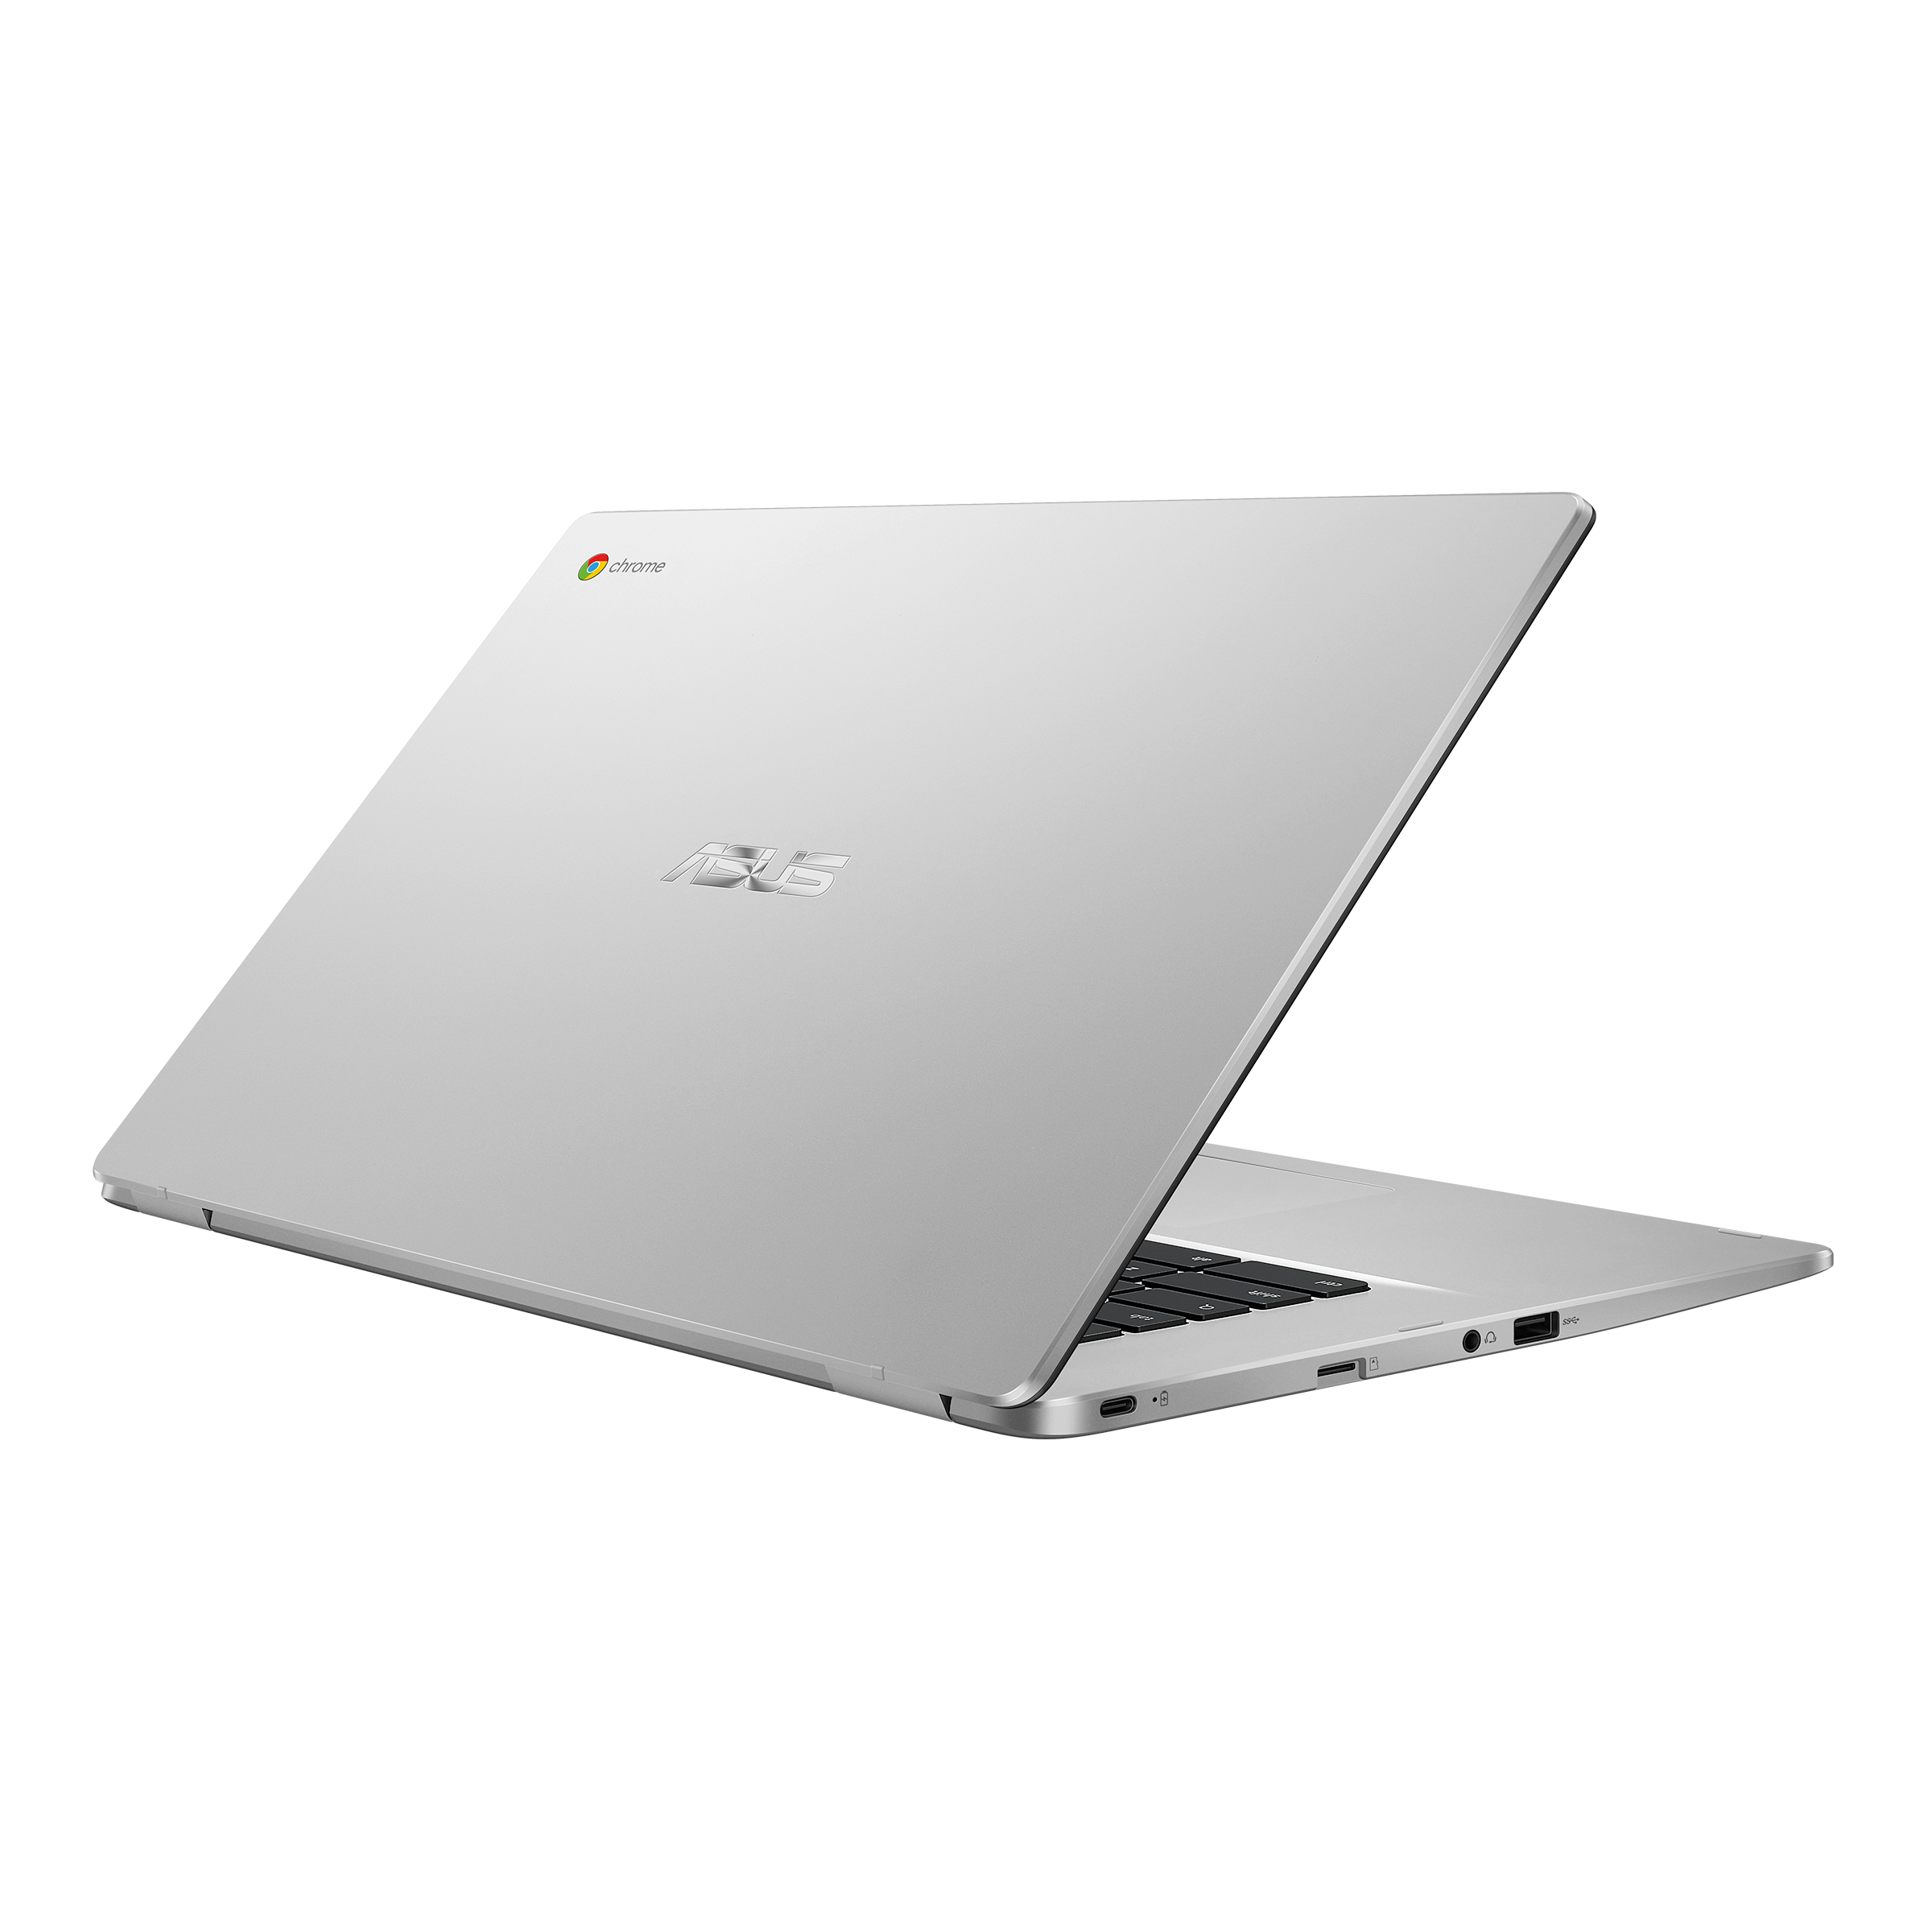 【新品未開封】ASUS Chromebook C523NA-EJ0130